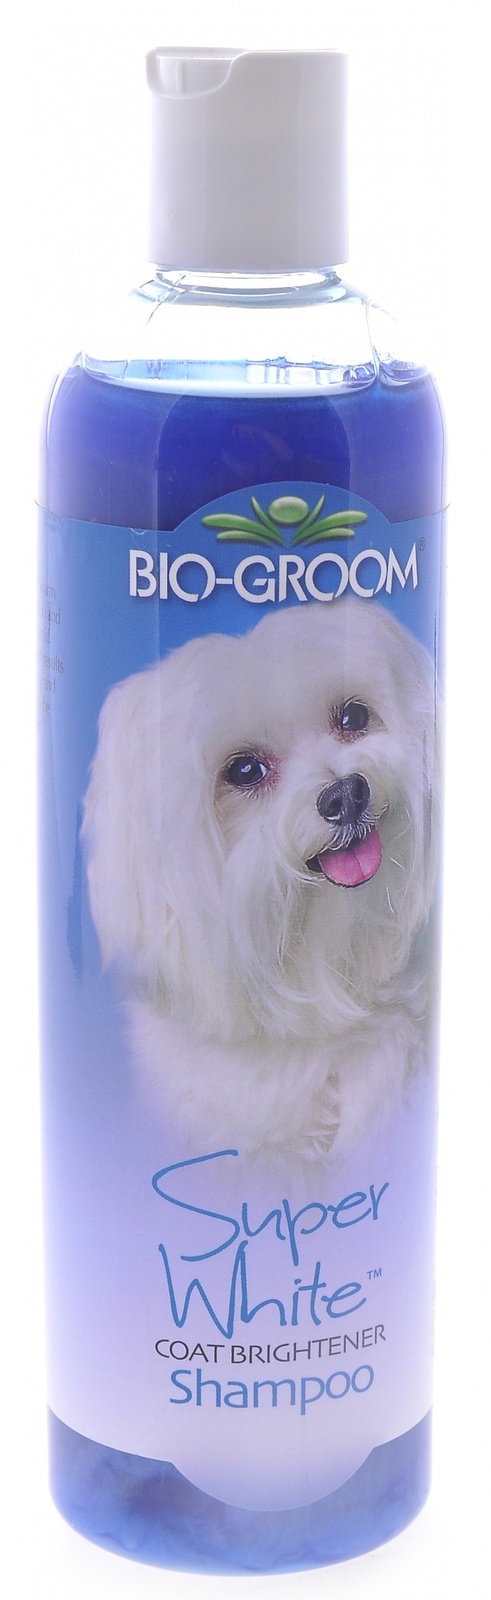 Biogroom Biogroom шампунь Супер Белый, концентрация 1:8, 3.2 литра готового шампуня (355 г)